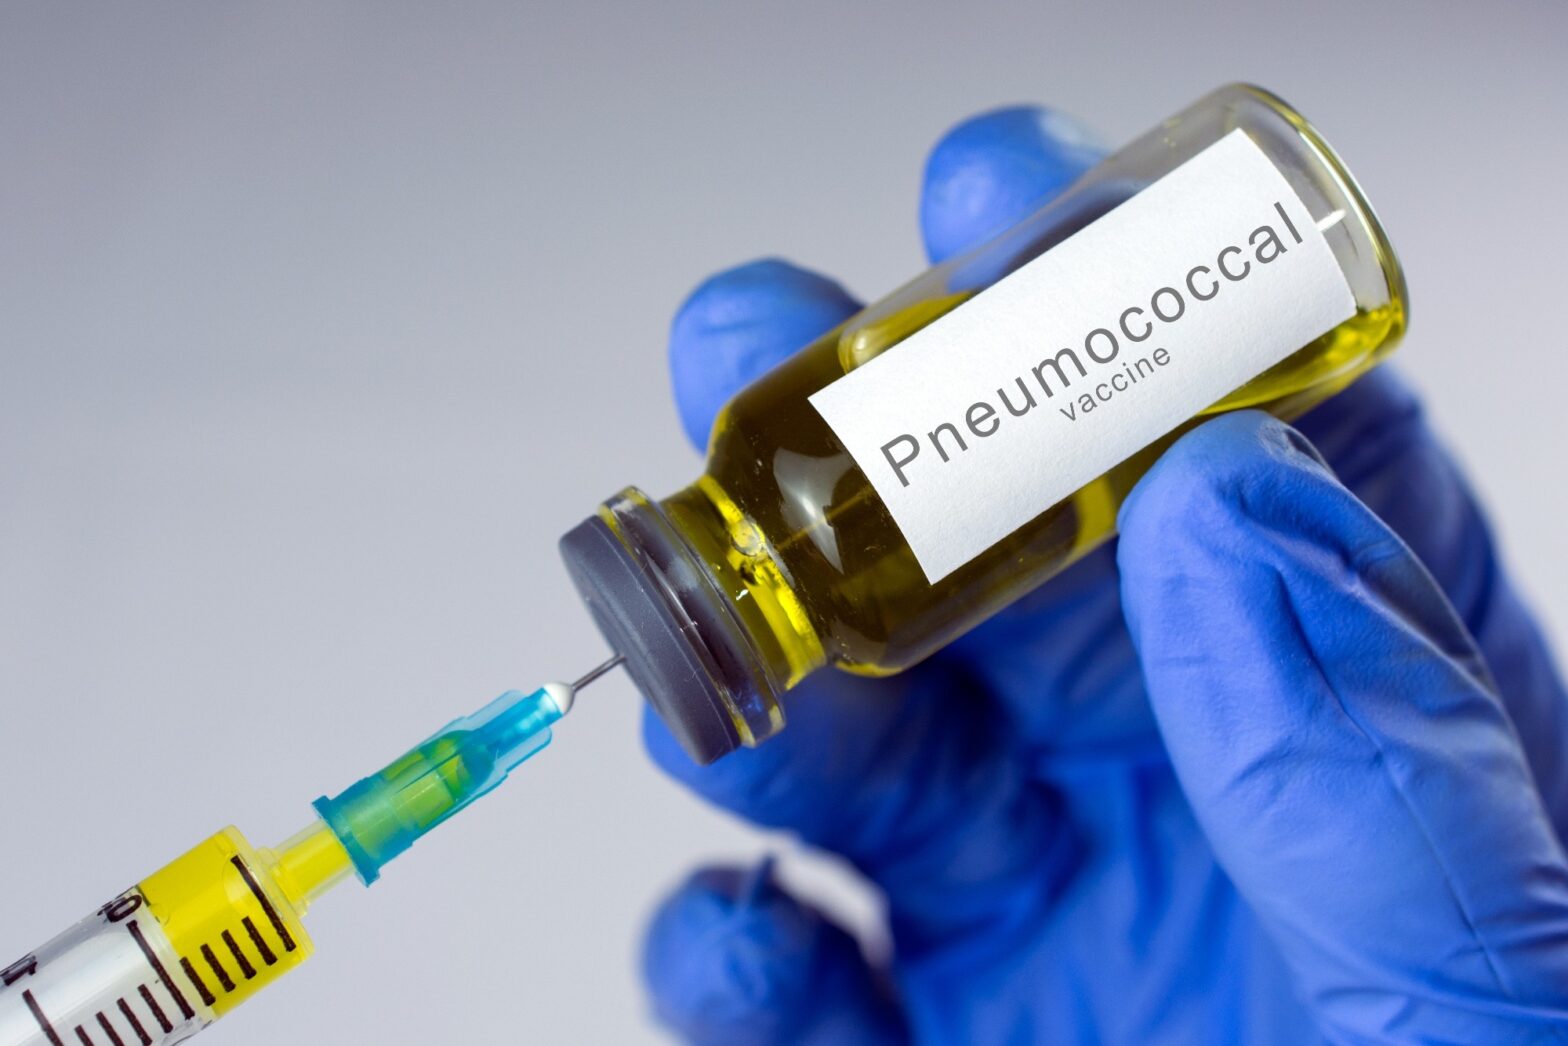 Pneumococcal Testing Market